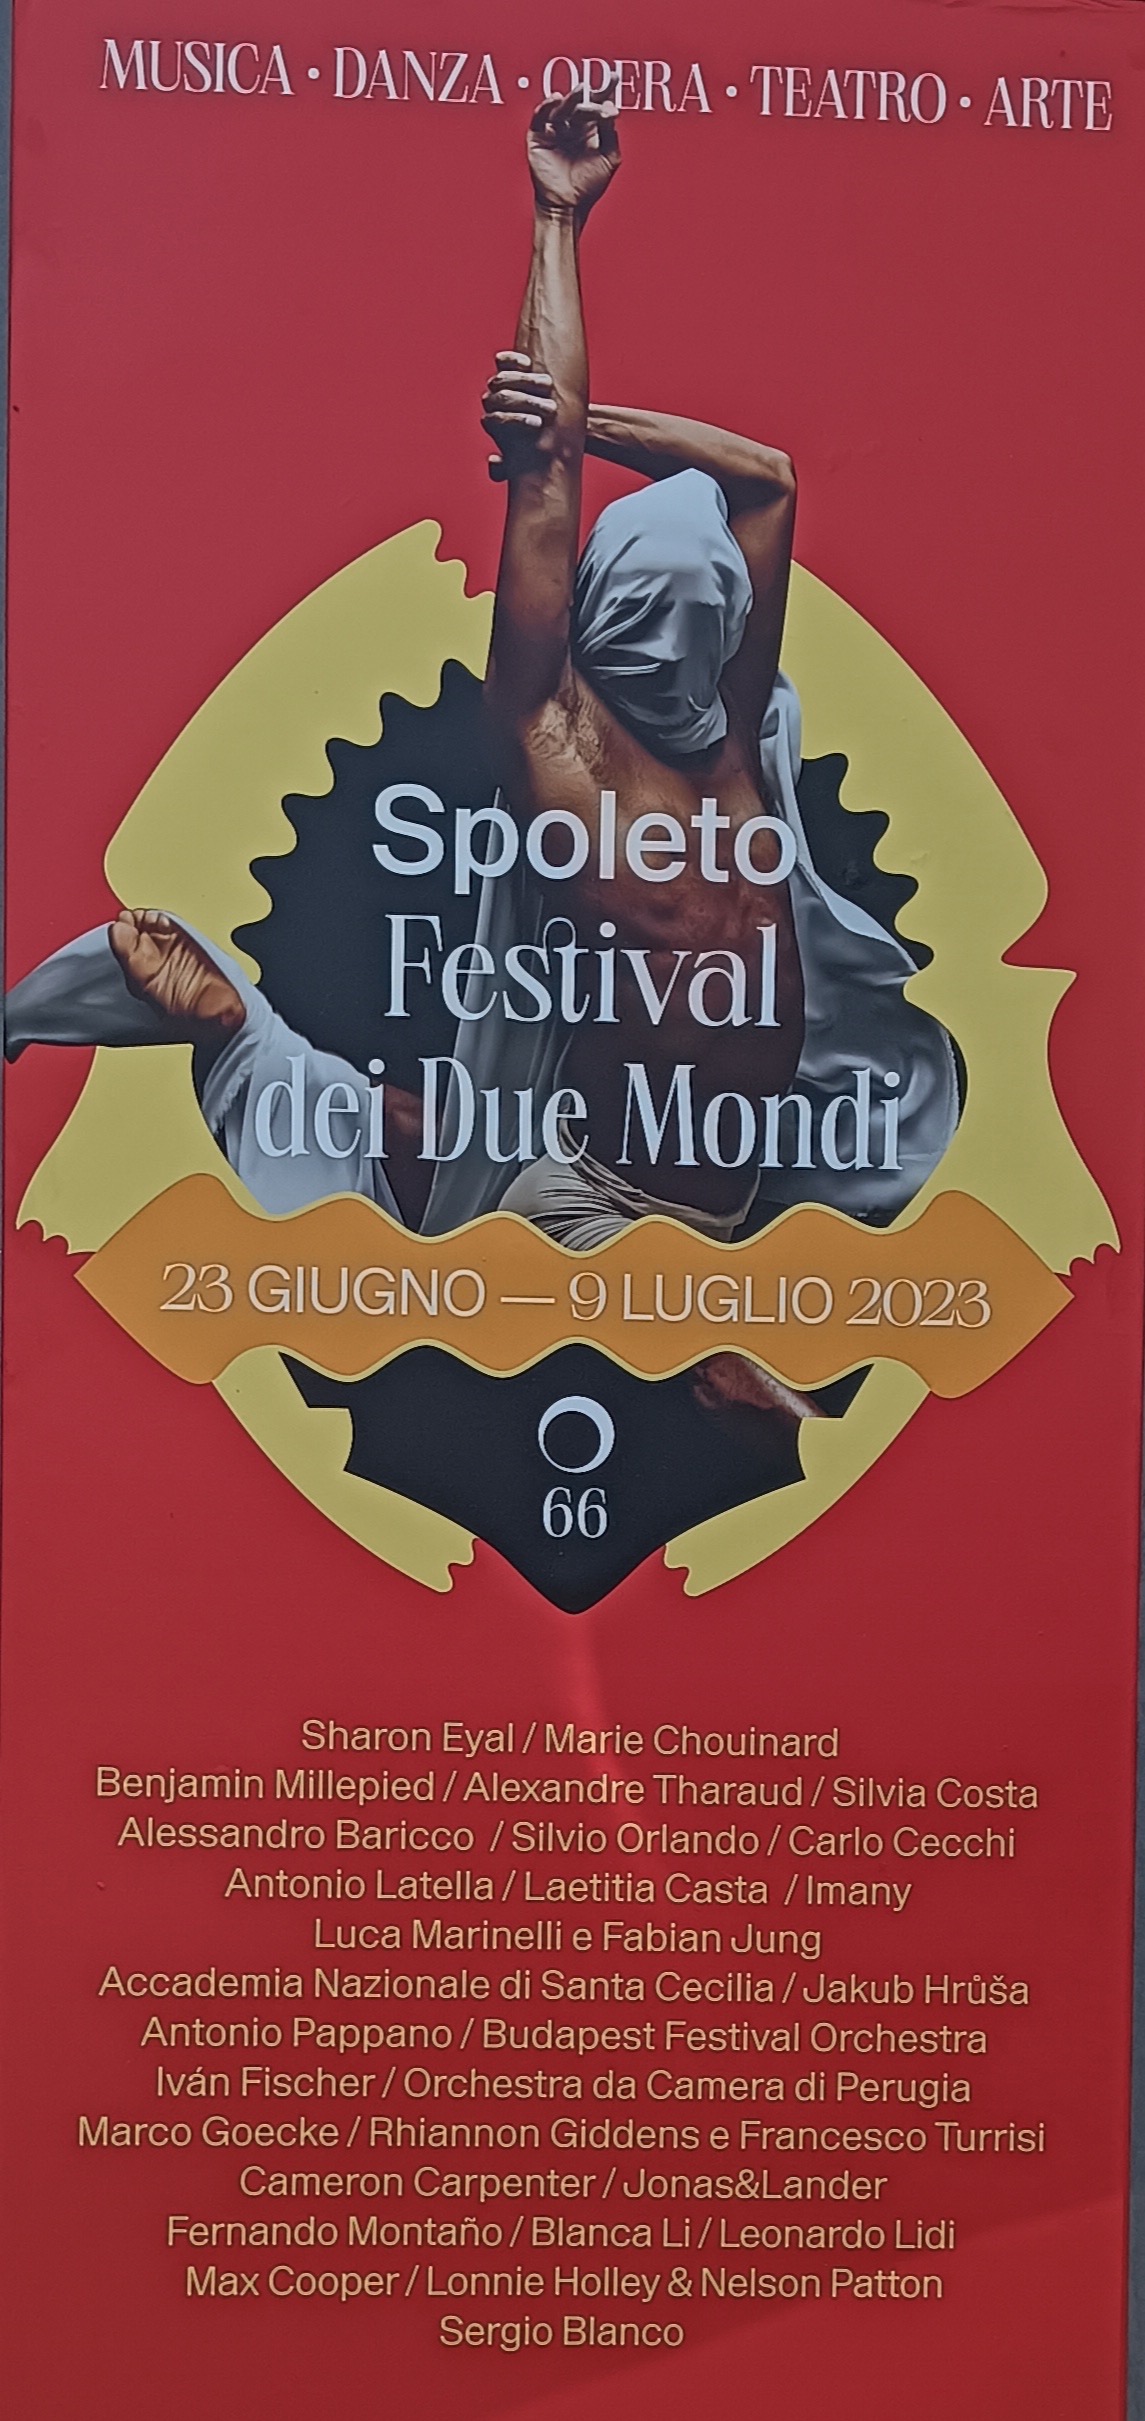 Spoleto, Festival dei Due Mondi